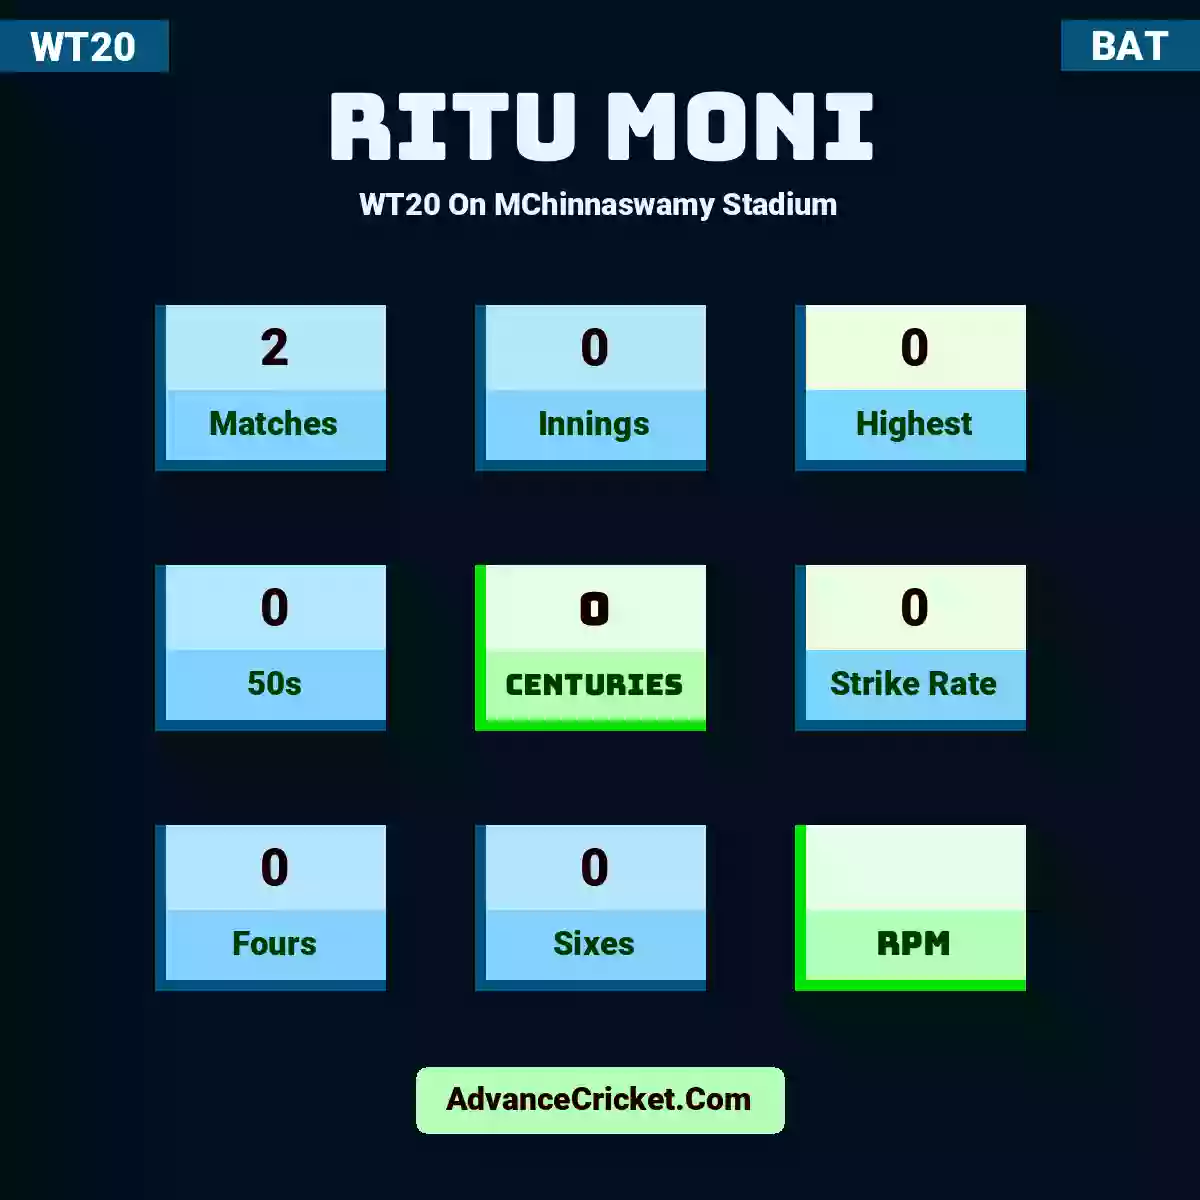 Ritu Moni WT20  On MChinnaswamy Stadium, Ritu Moni played 2 matches, scored 0 runs as highest, 0 half-centuries, and 0 centuries, with a strike rate of 0. R.Moni hit 0 fours and 0 sixes.